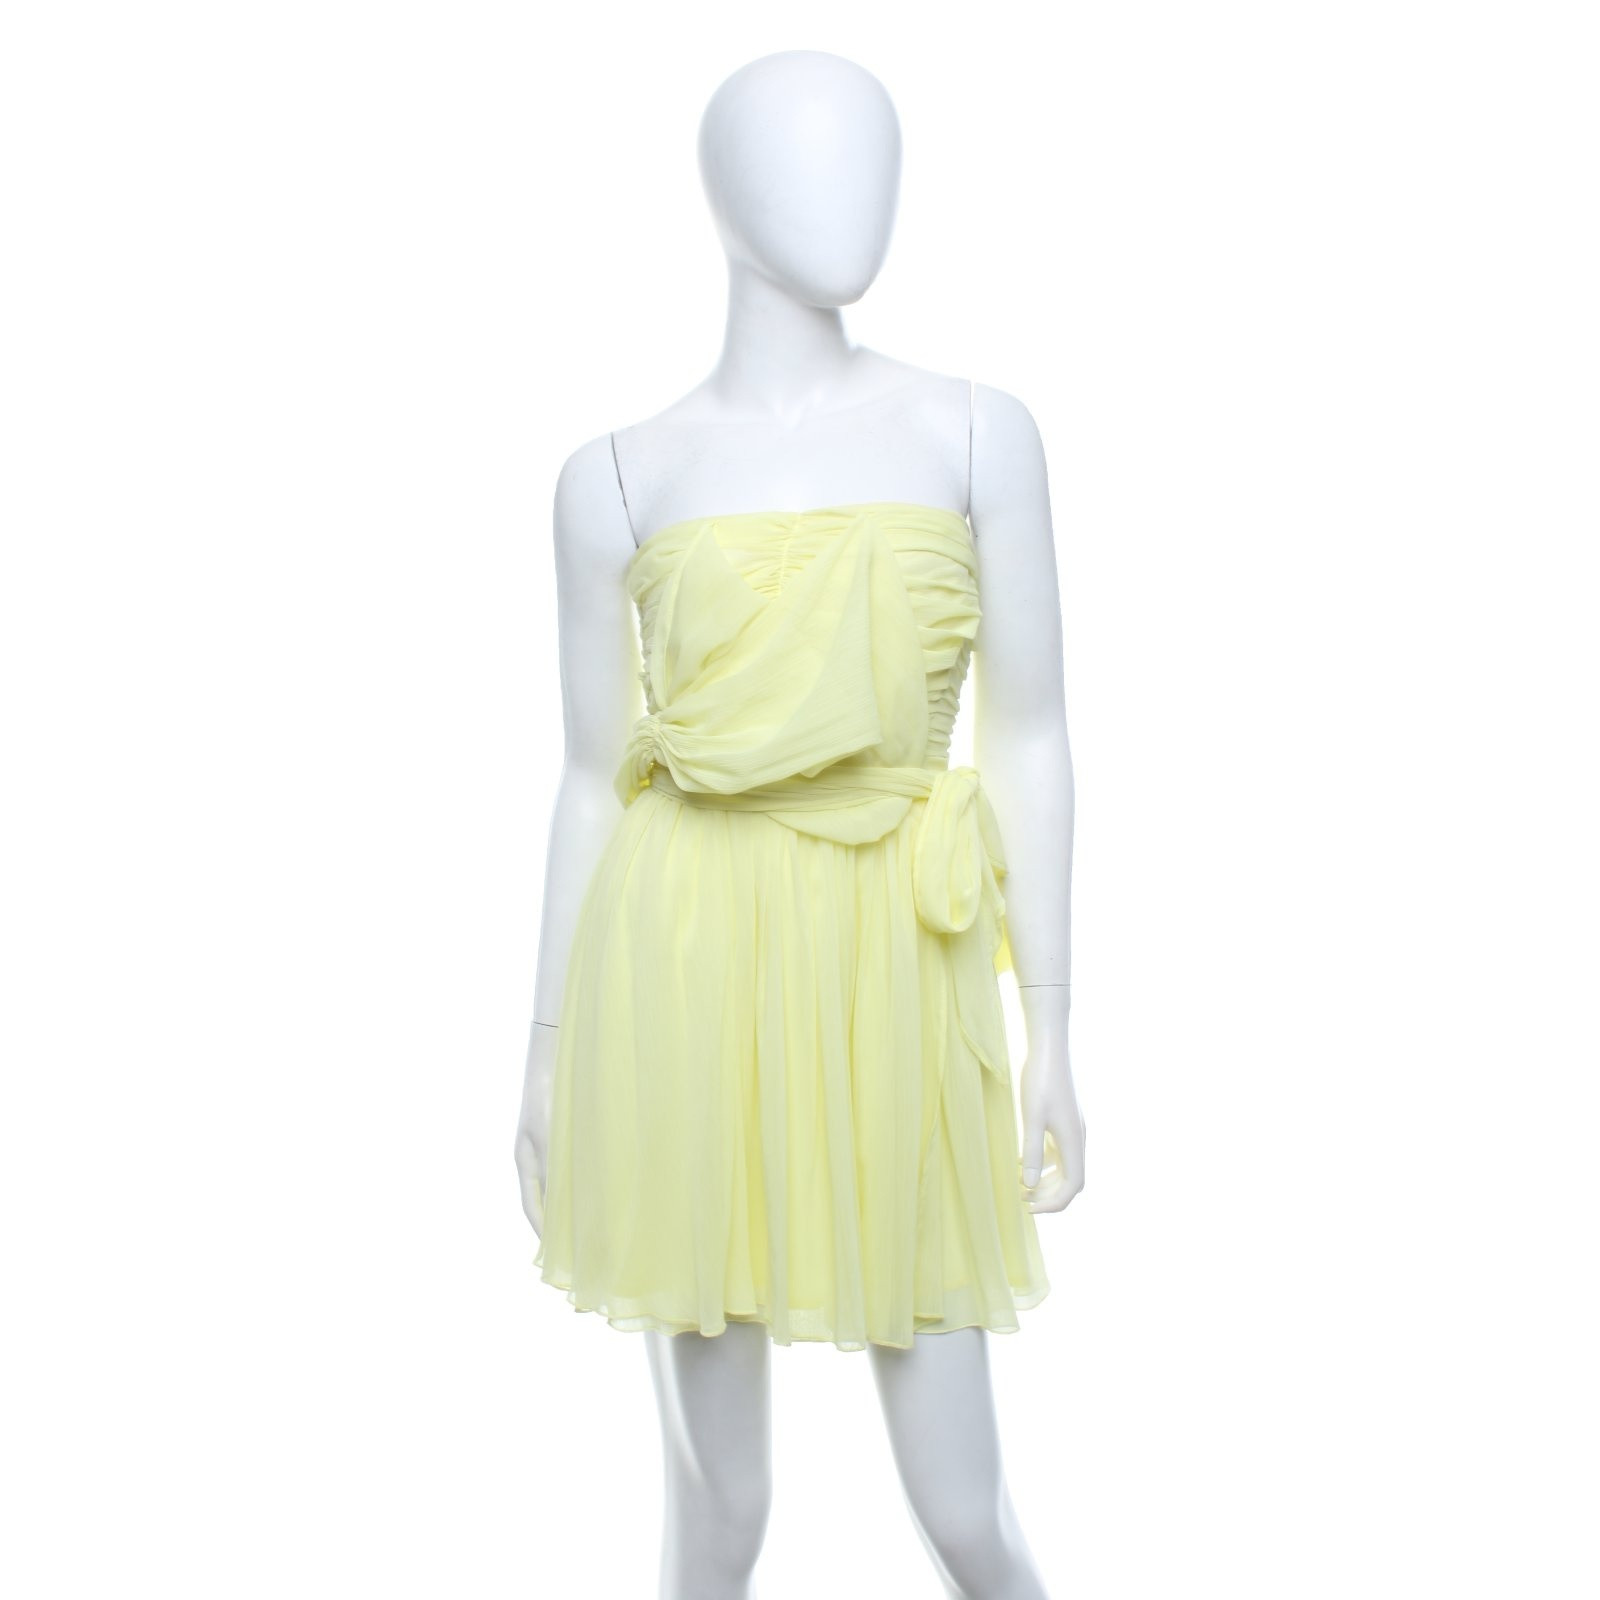 TOPSHOP Women's Kate Moss - dress in yellow Size: UK 8